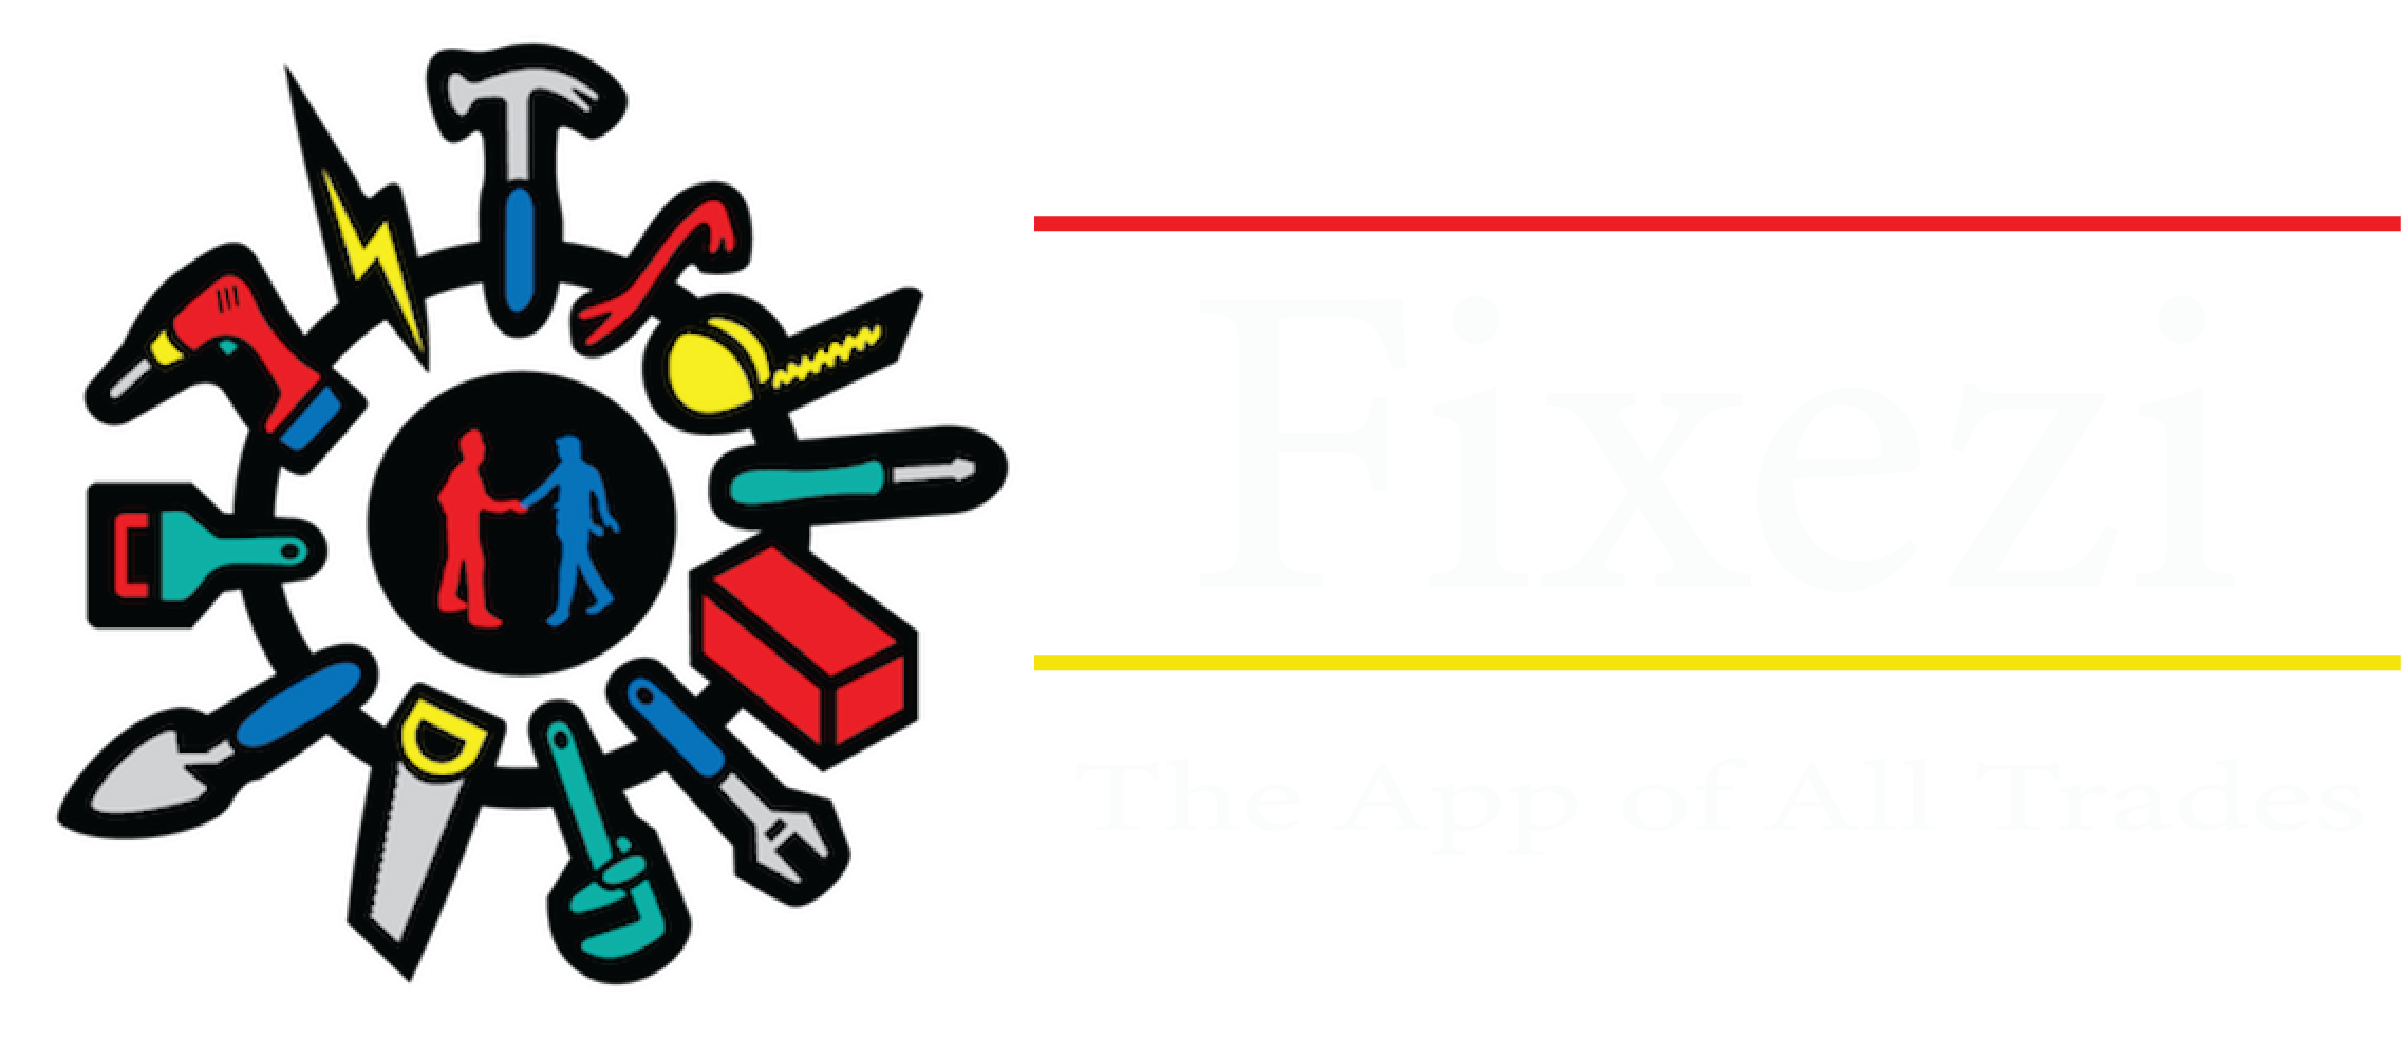 Fixezi The App of All Trades logo, name and slogan.